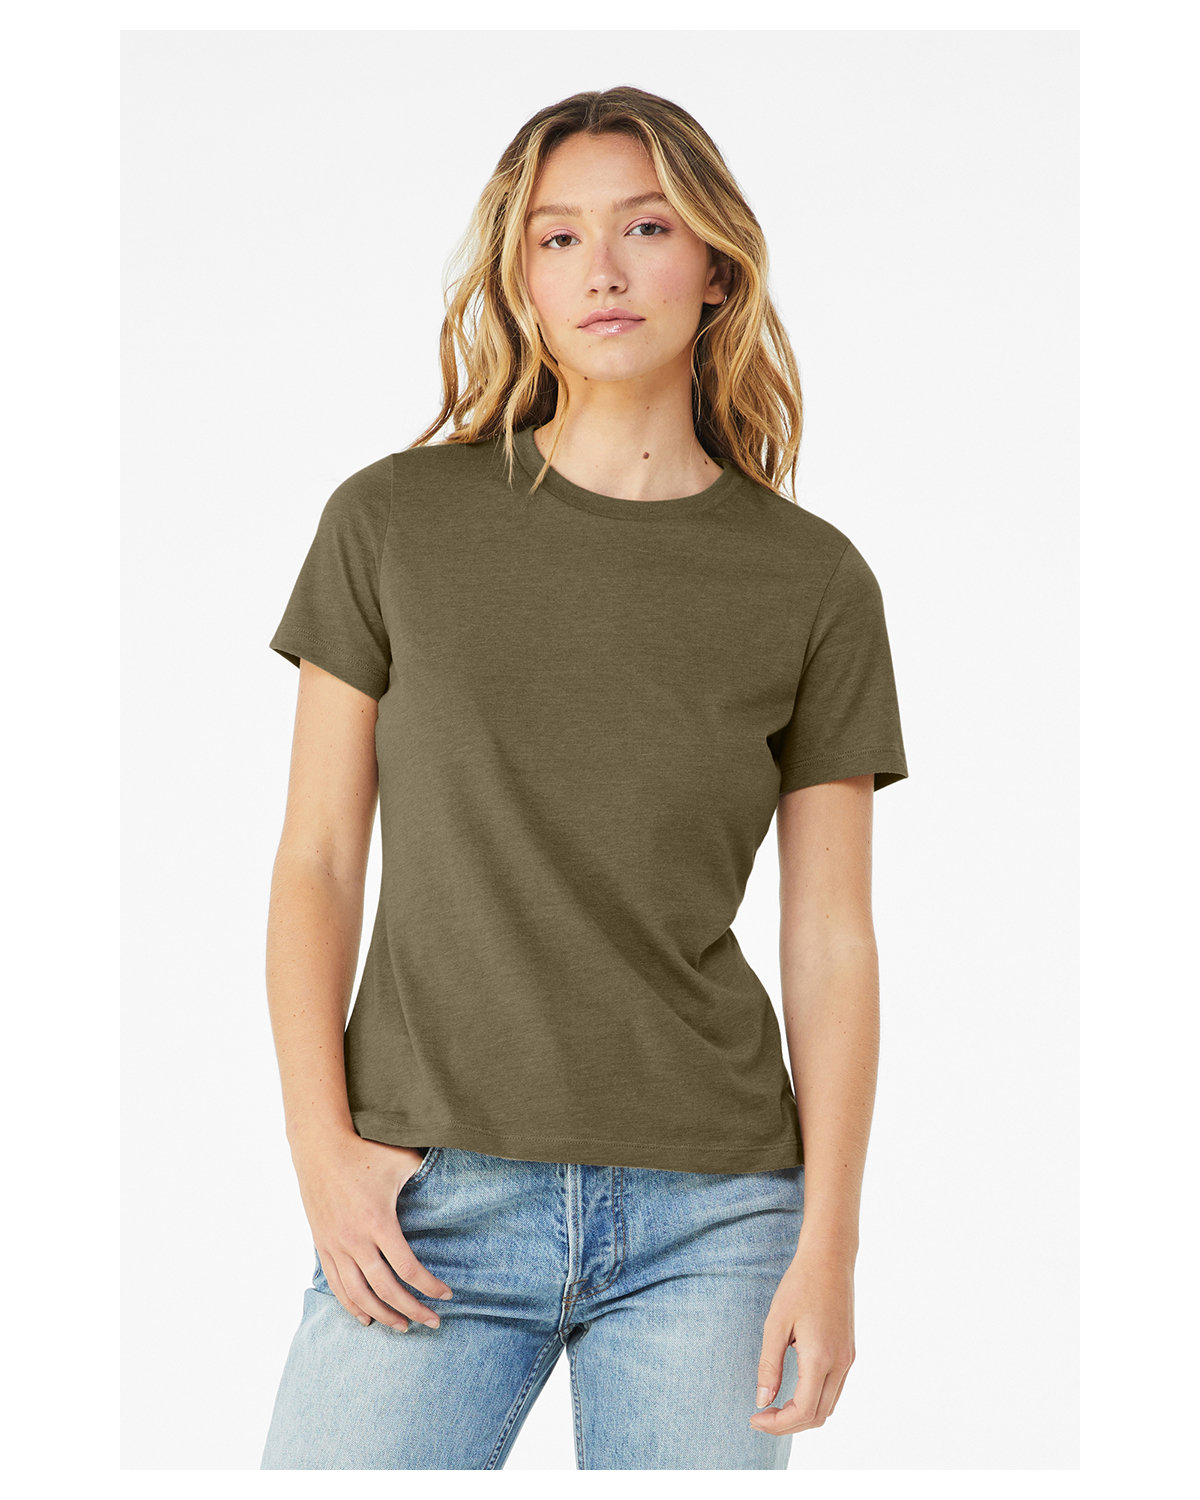 Cathalem Womens Basic T-Shirts Short Sleeve Tunic Tops - Womens